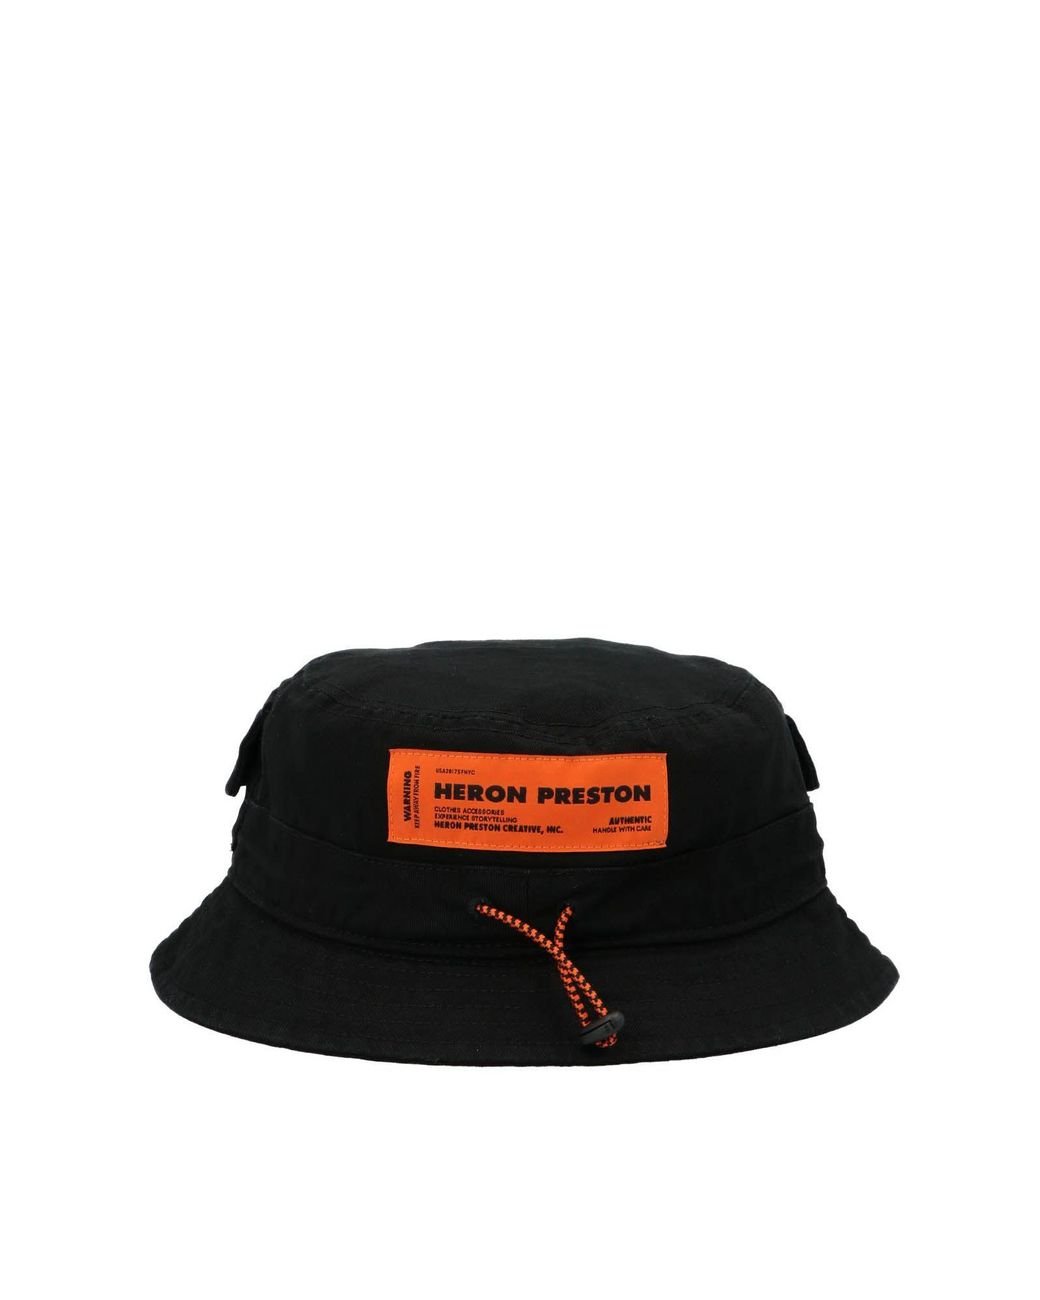 Heron Preston Cotton Logo Bucket Hat in Black for Men - Lyst